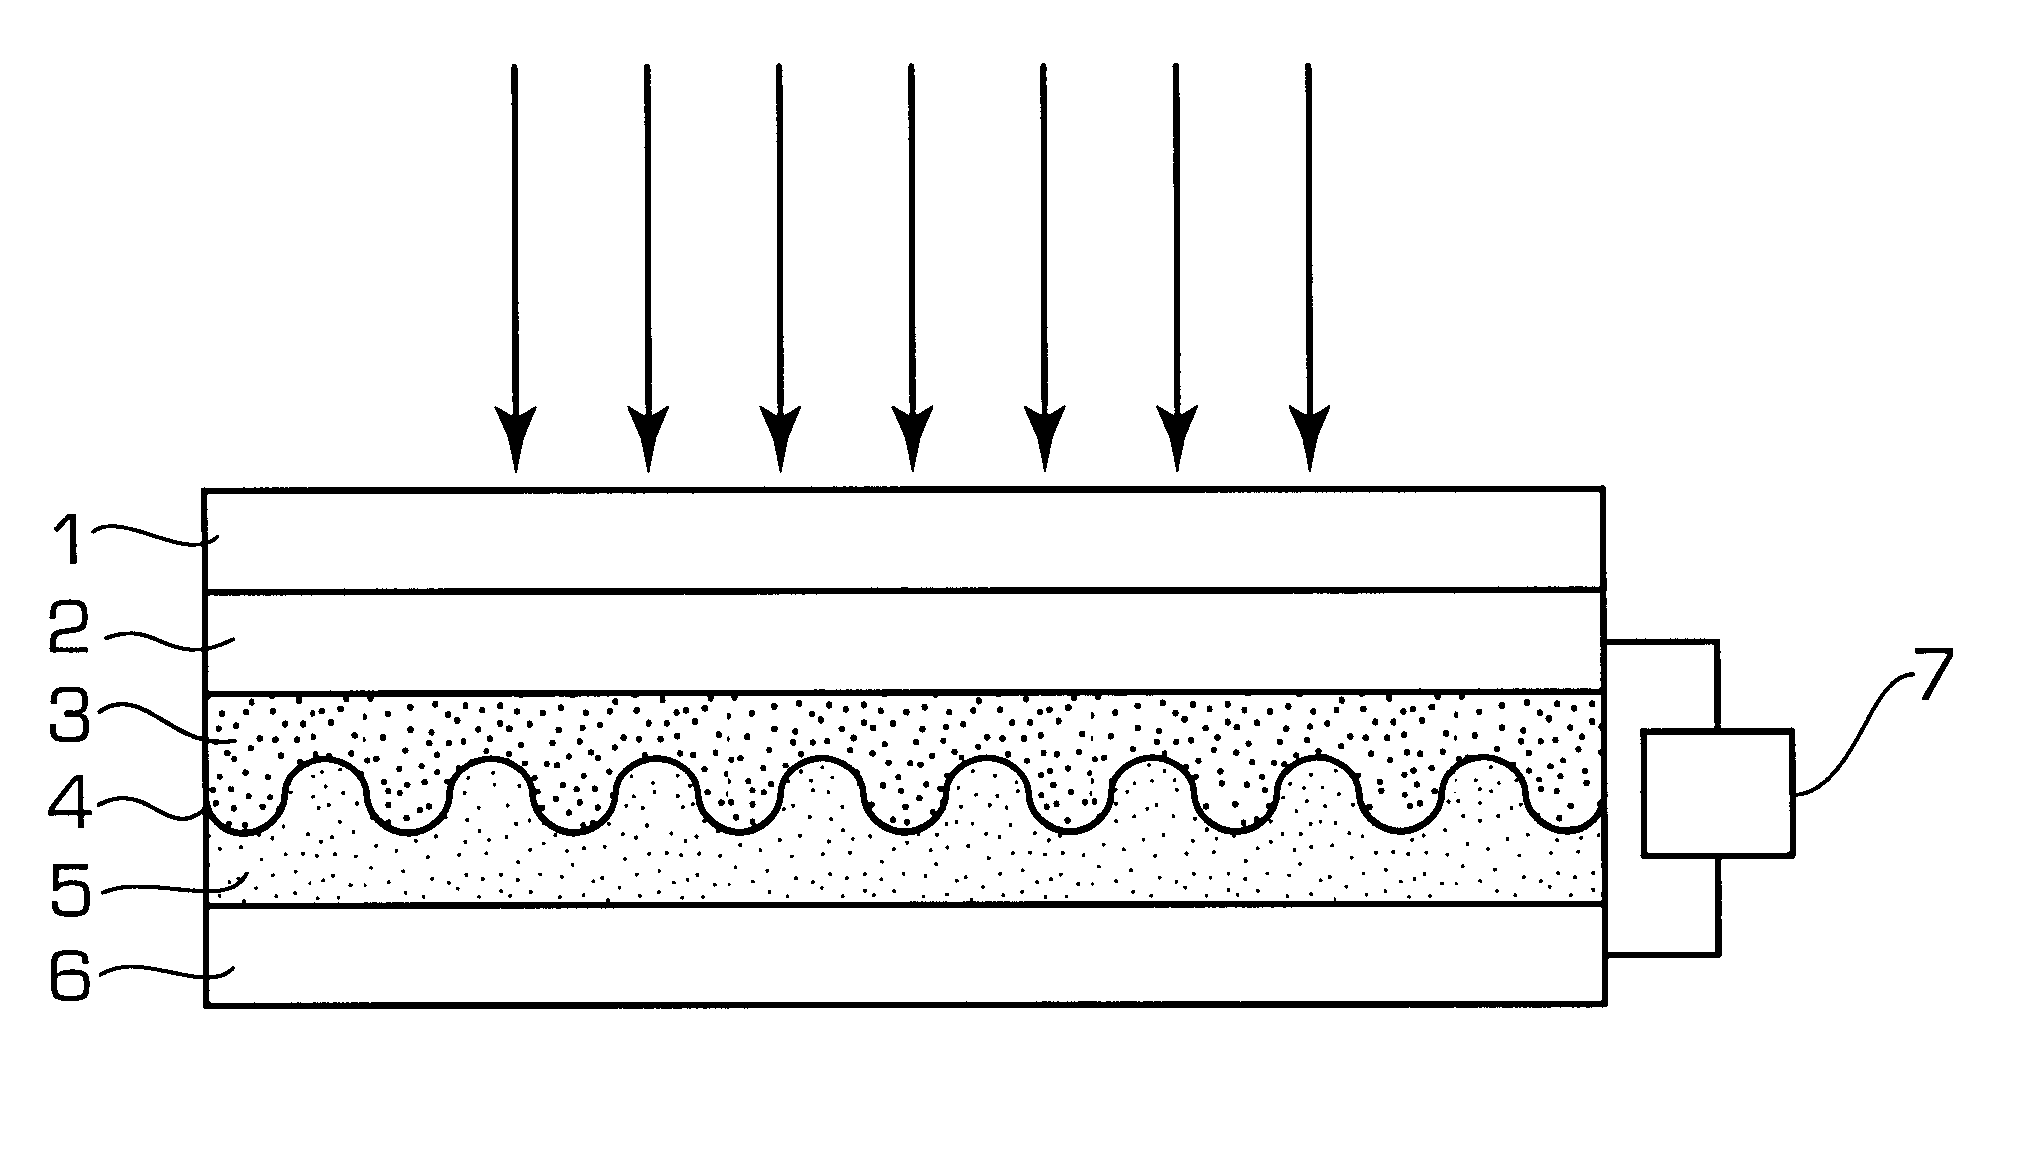 Dye-sensitization-type photoelectric conversion element